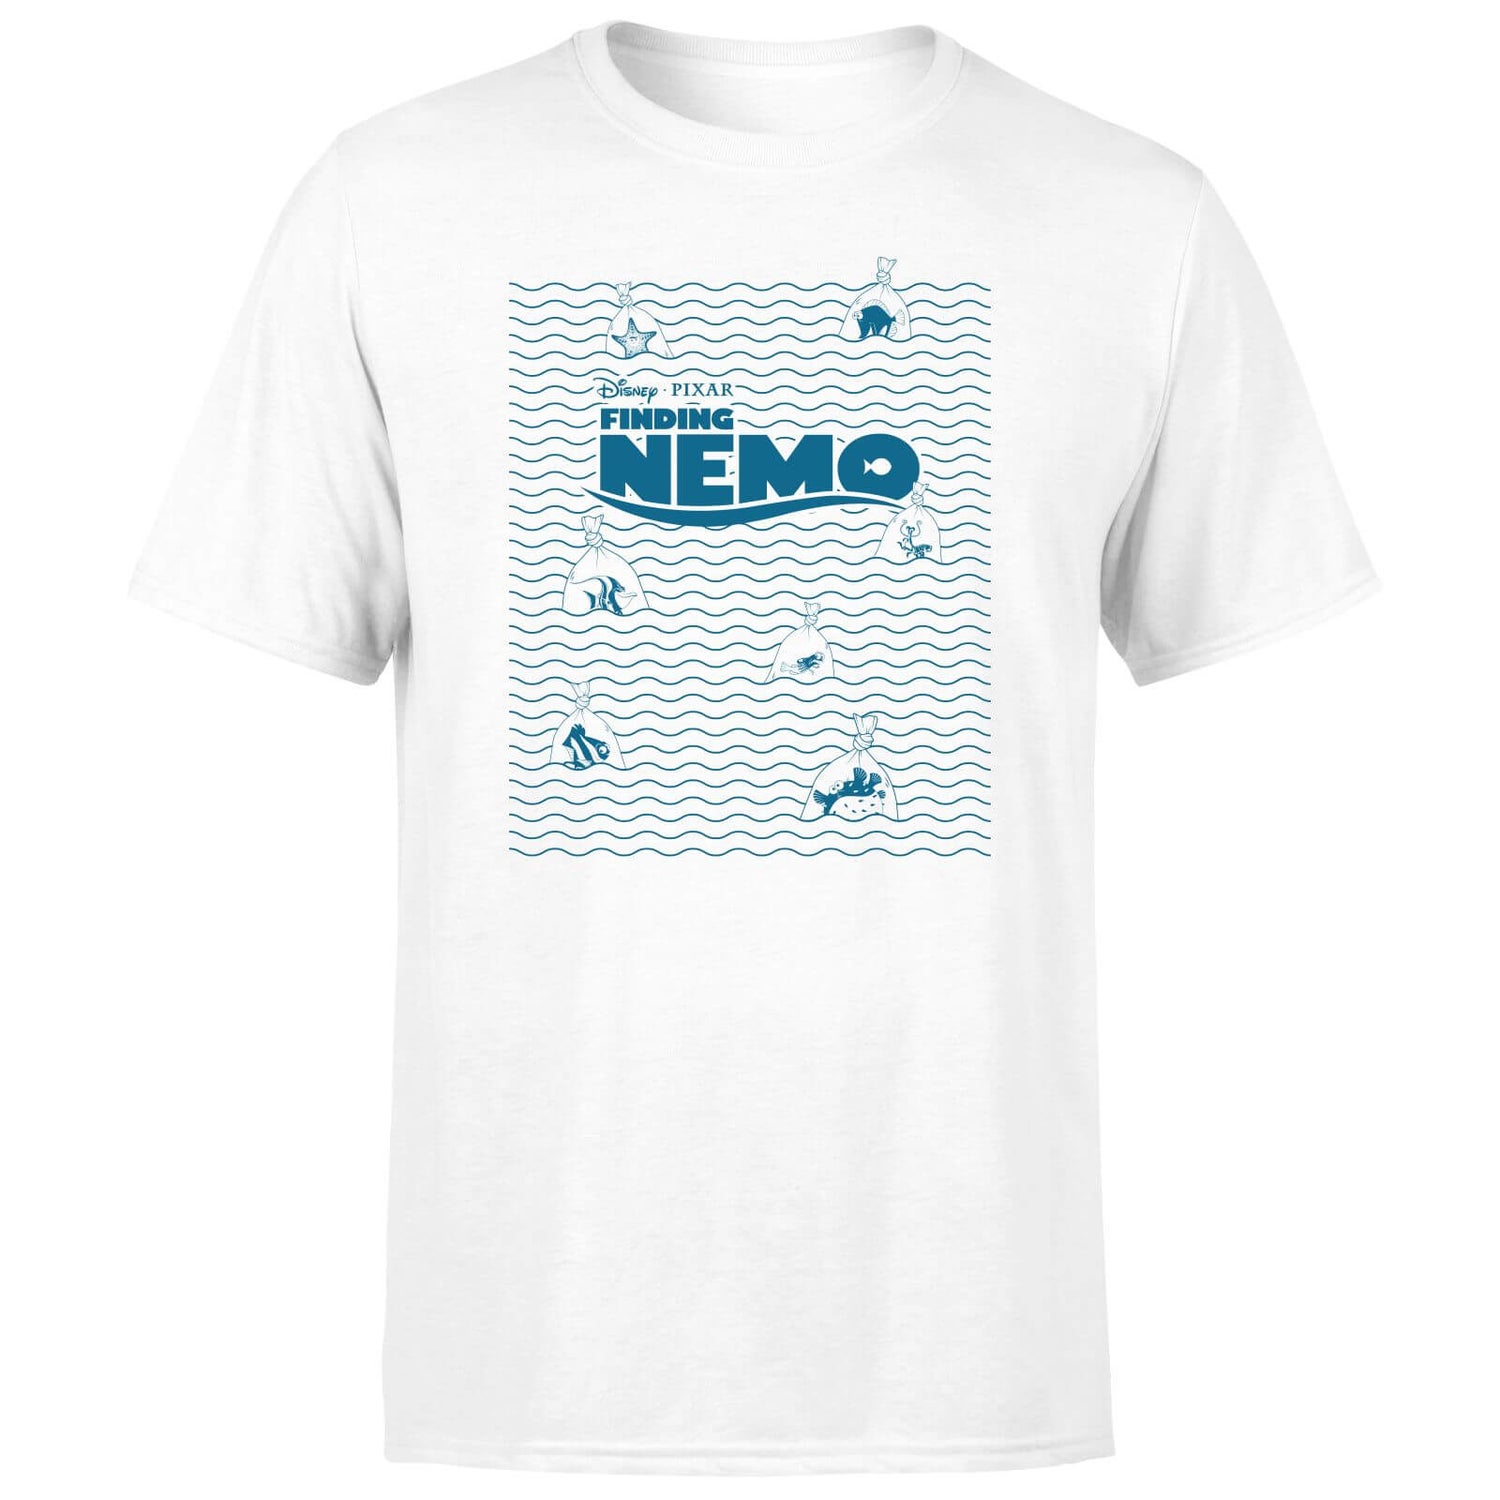 Finding Nemo Now What? Men's T-Shirt - White